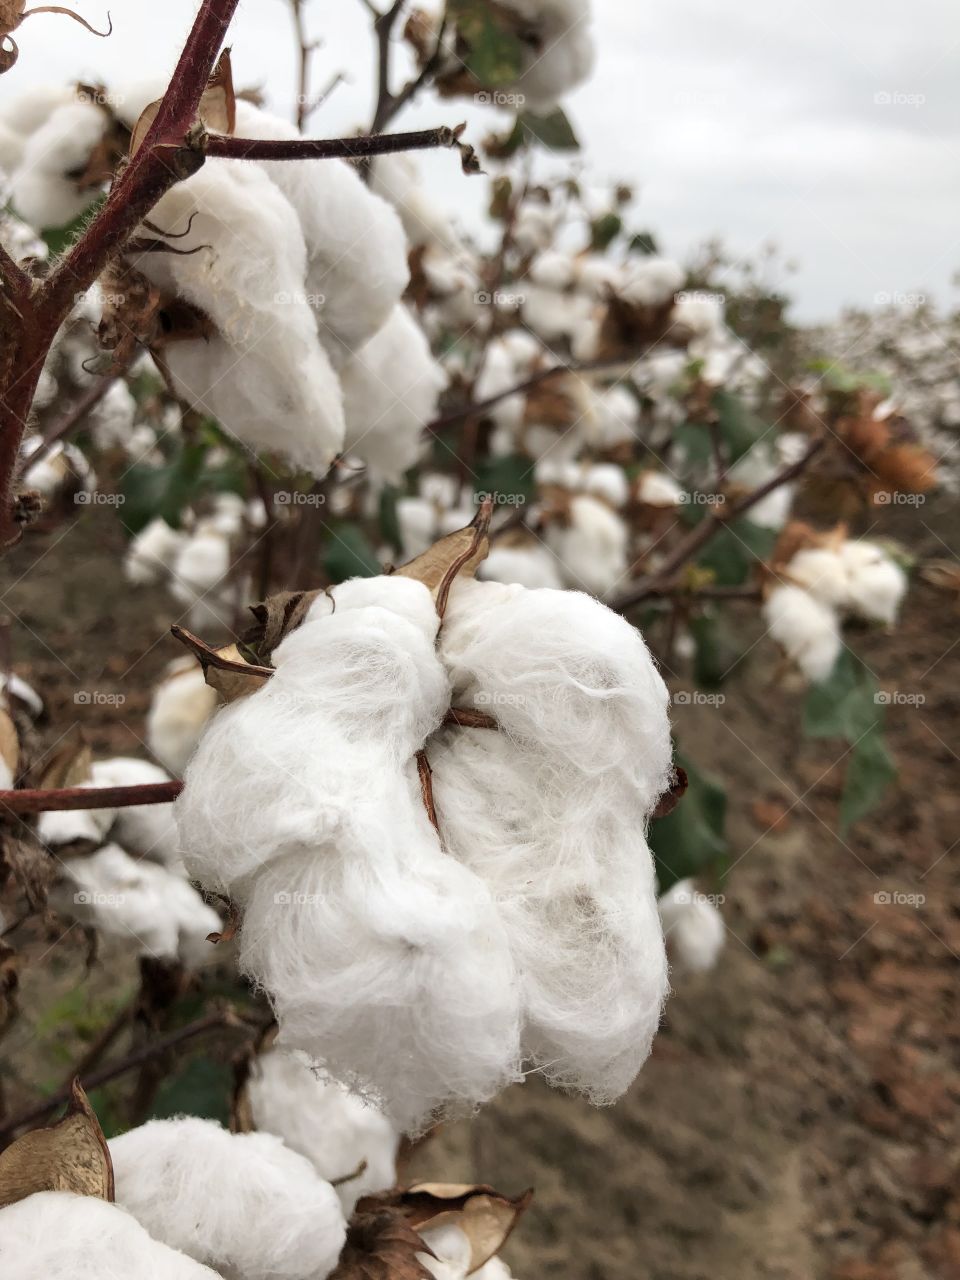 Cotton field in Missouri 